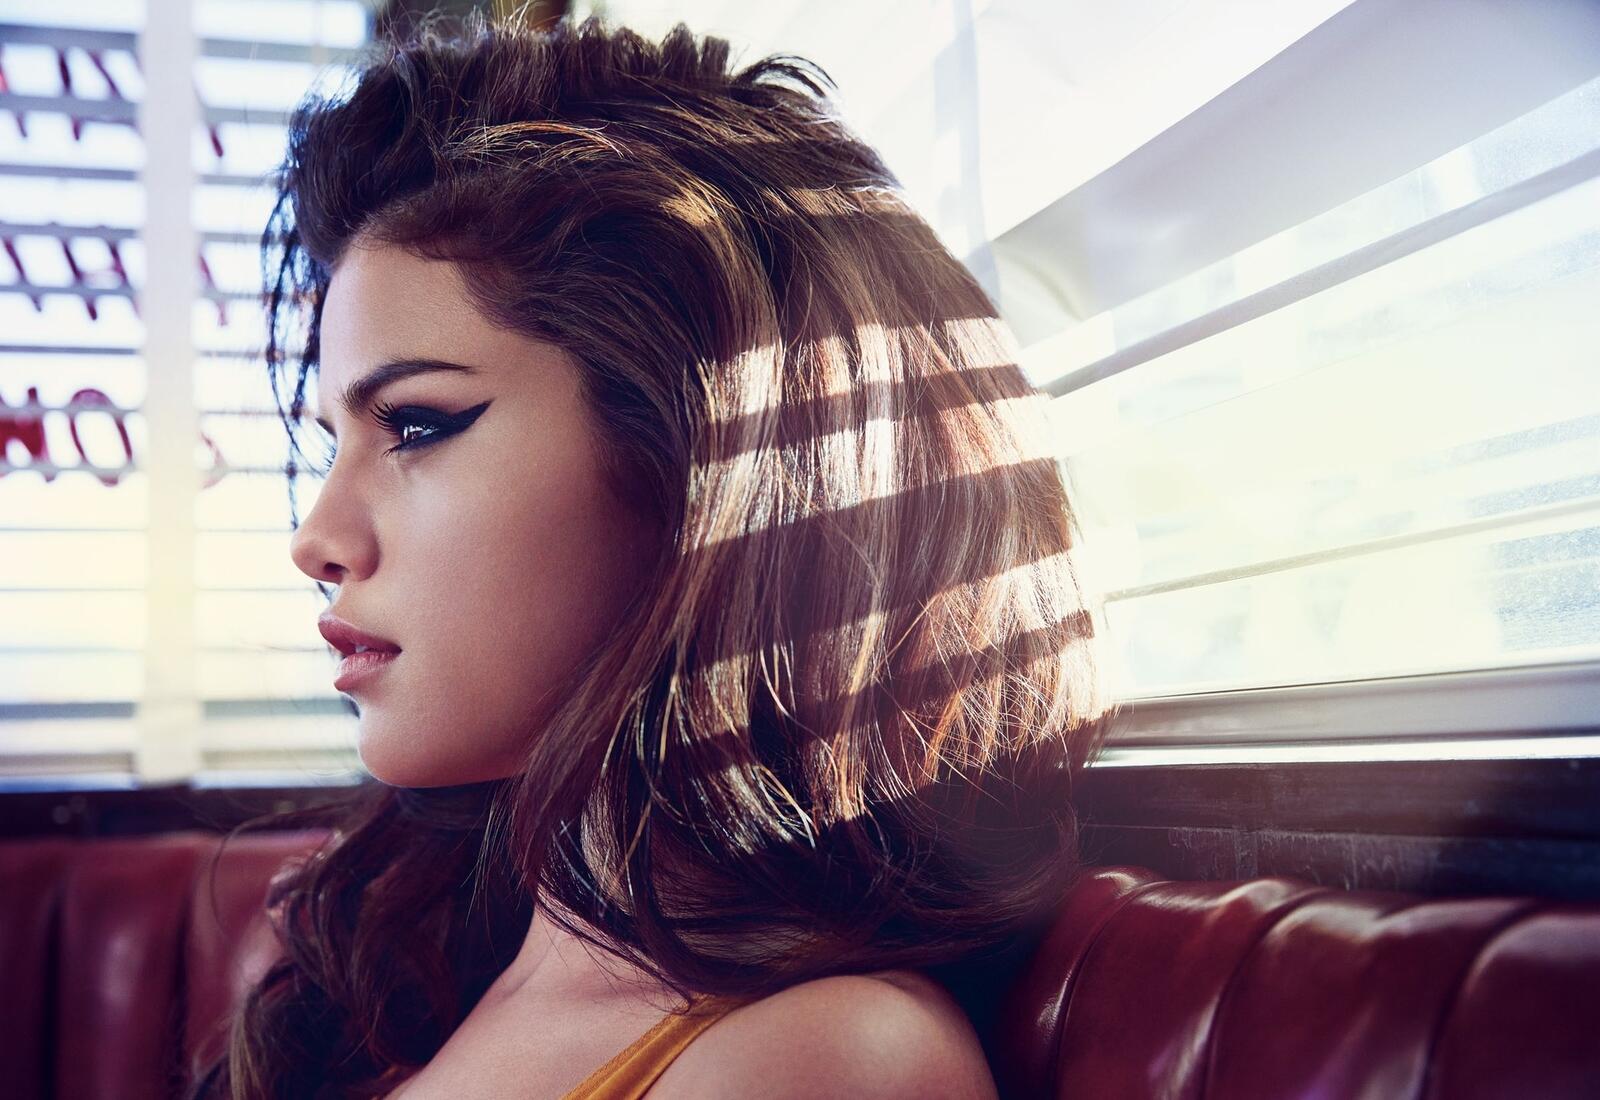 Wallpapers Selena Gomez profile view celebrity on the desktop